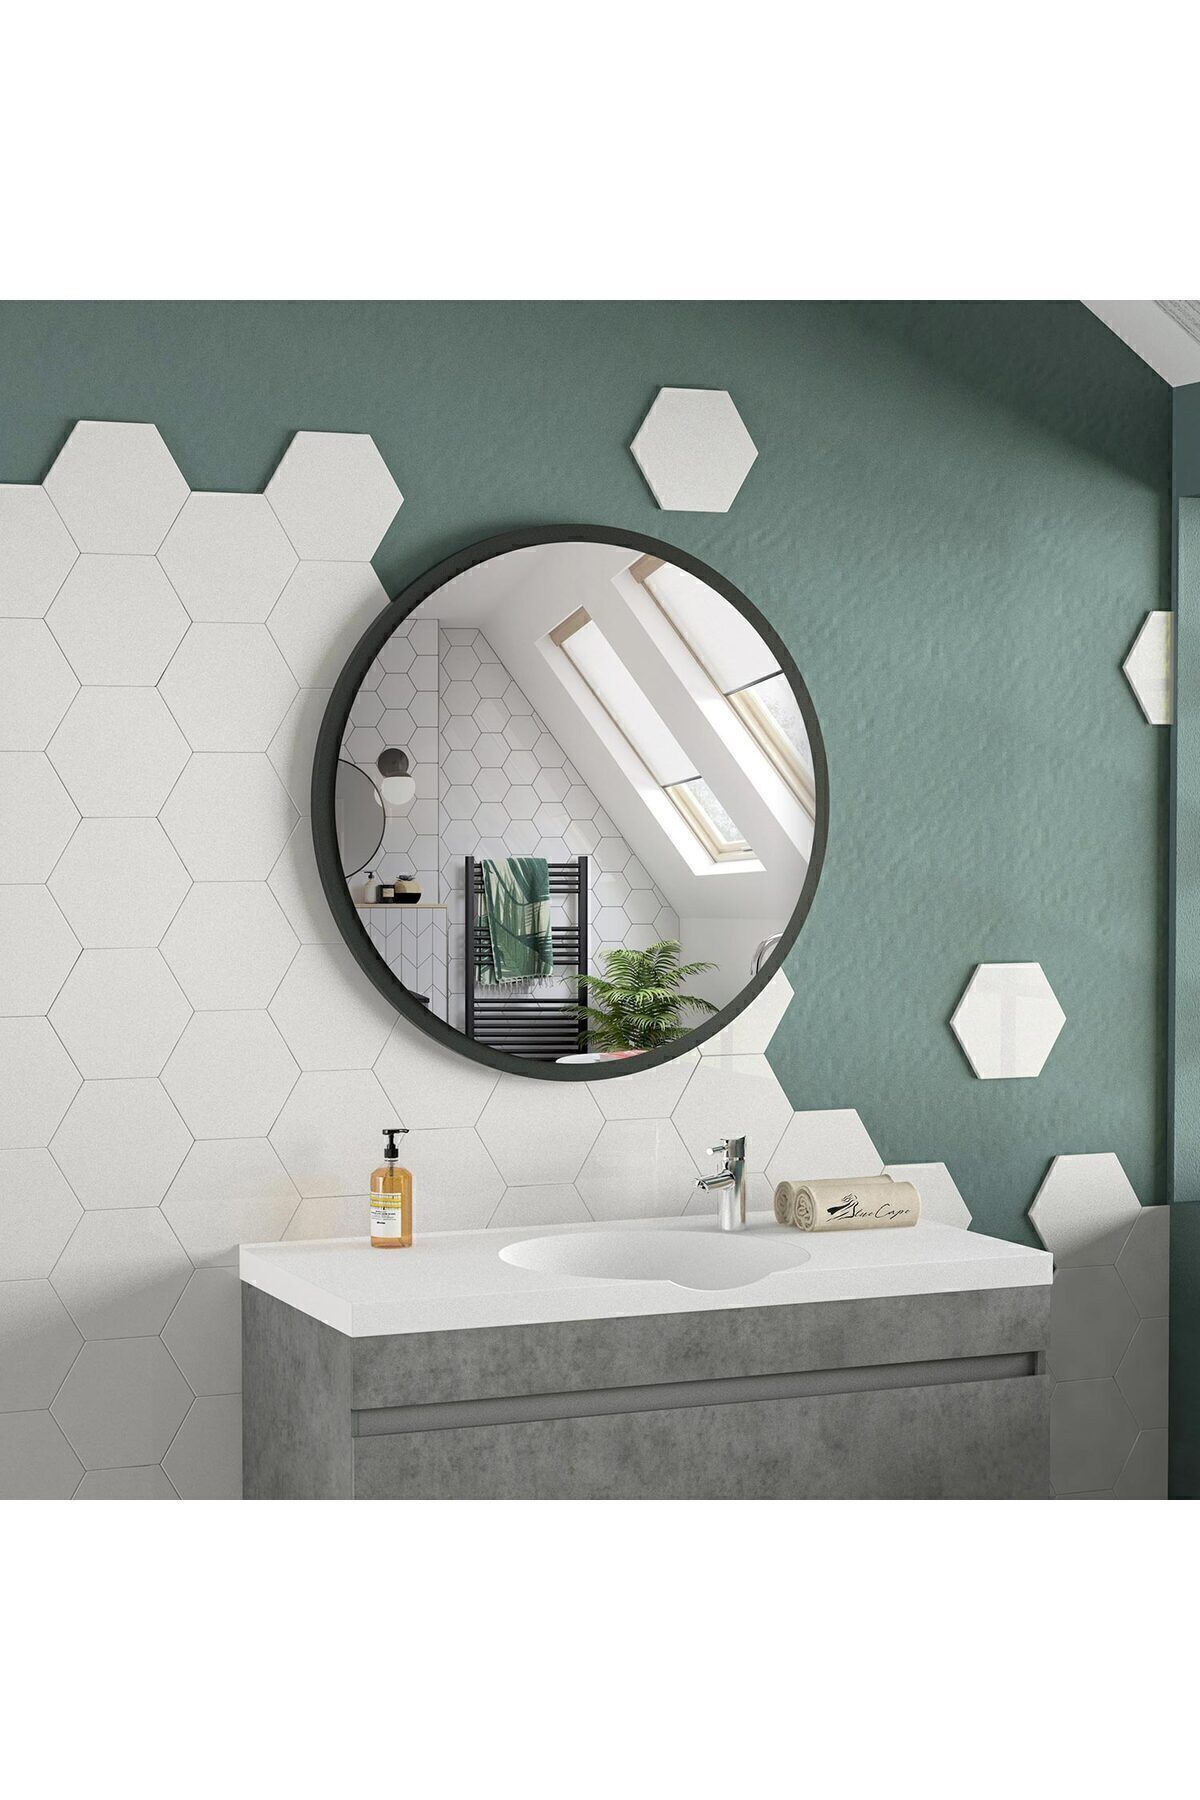 Bofigo 60 Cm Porto Banyo Aynası Dekoratif Lavabo Aynası Yuvarlak Ayna Antrasit